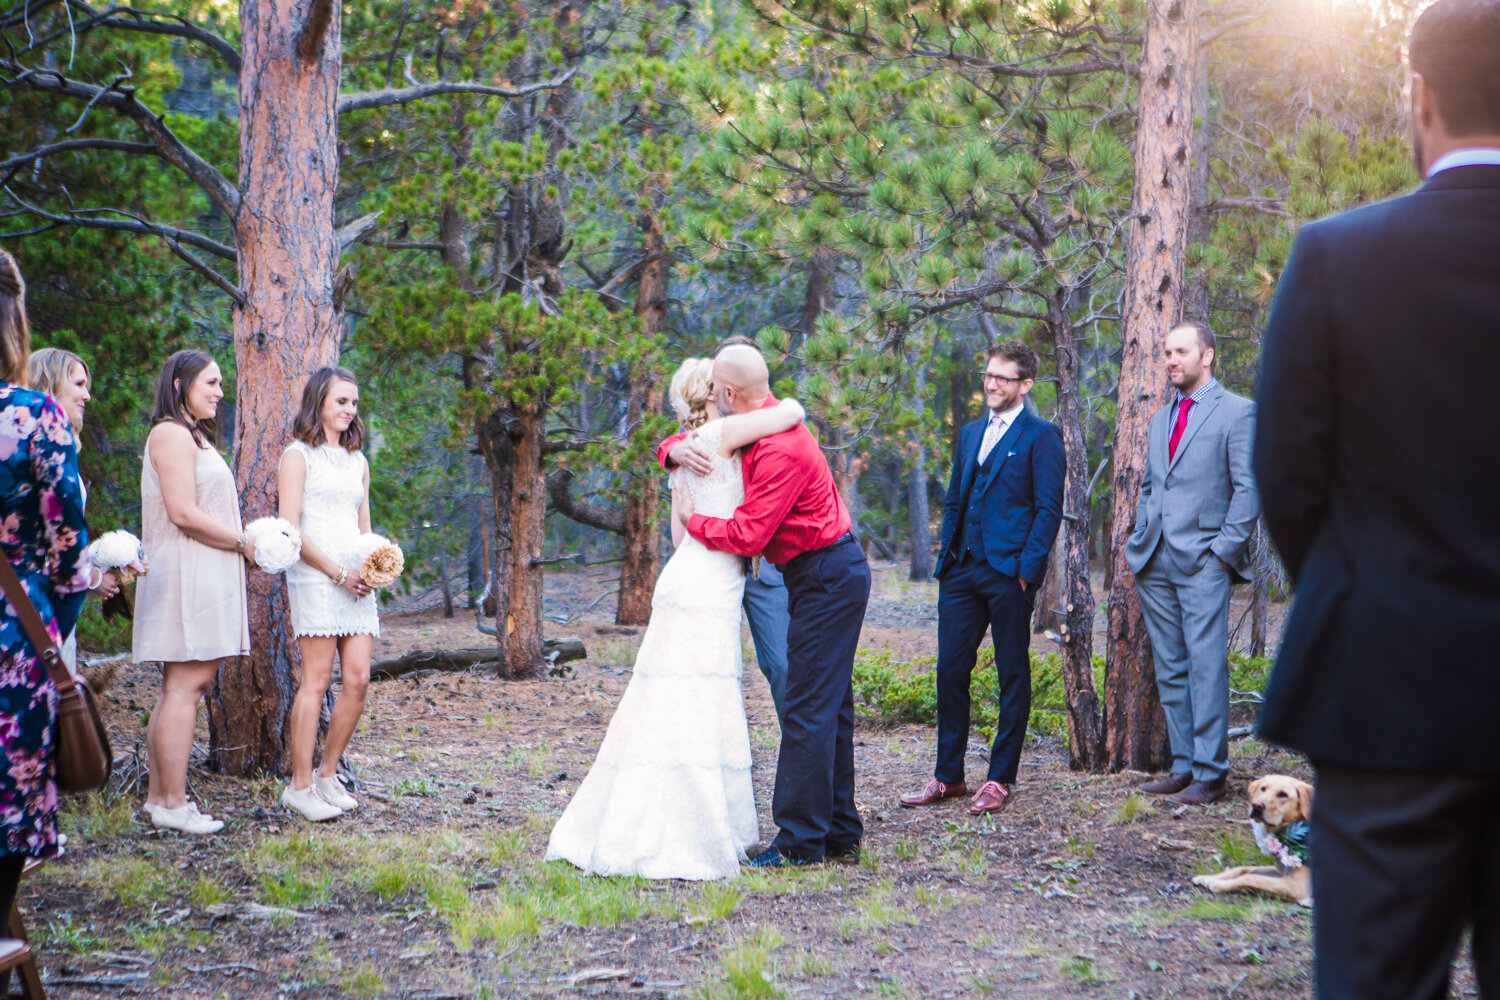  Nederland Colorado Wedding by JMGant Photography.&nbsp; 